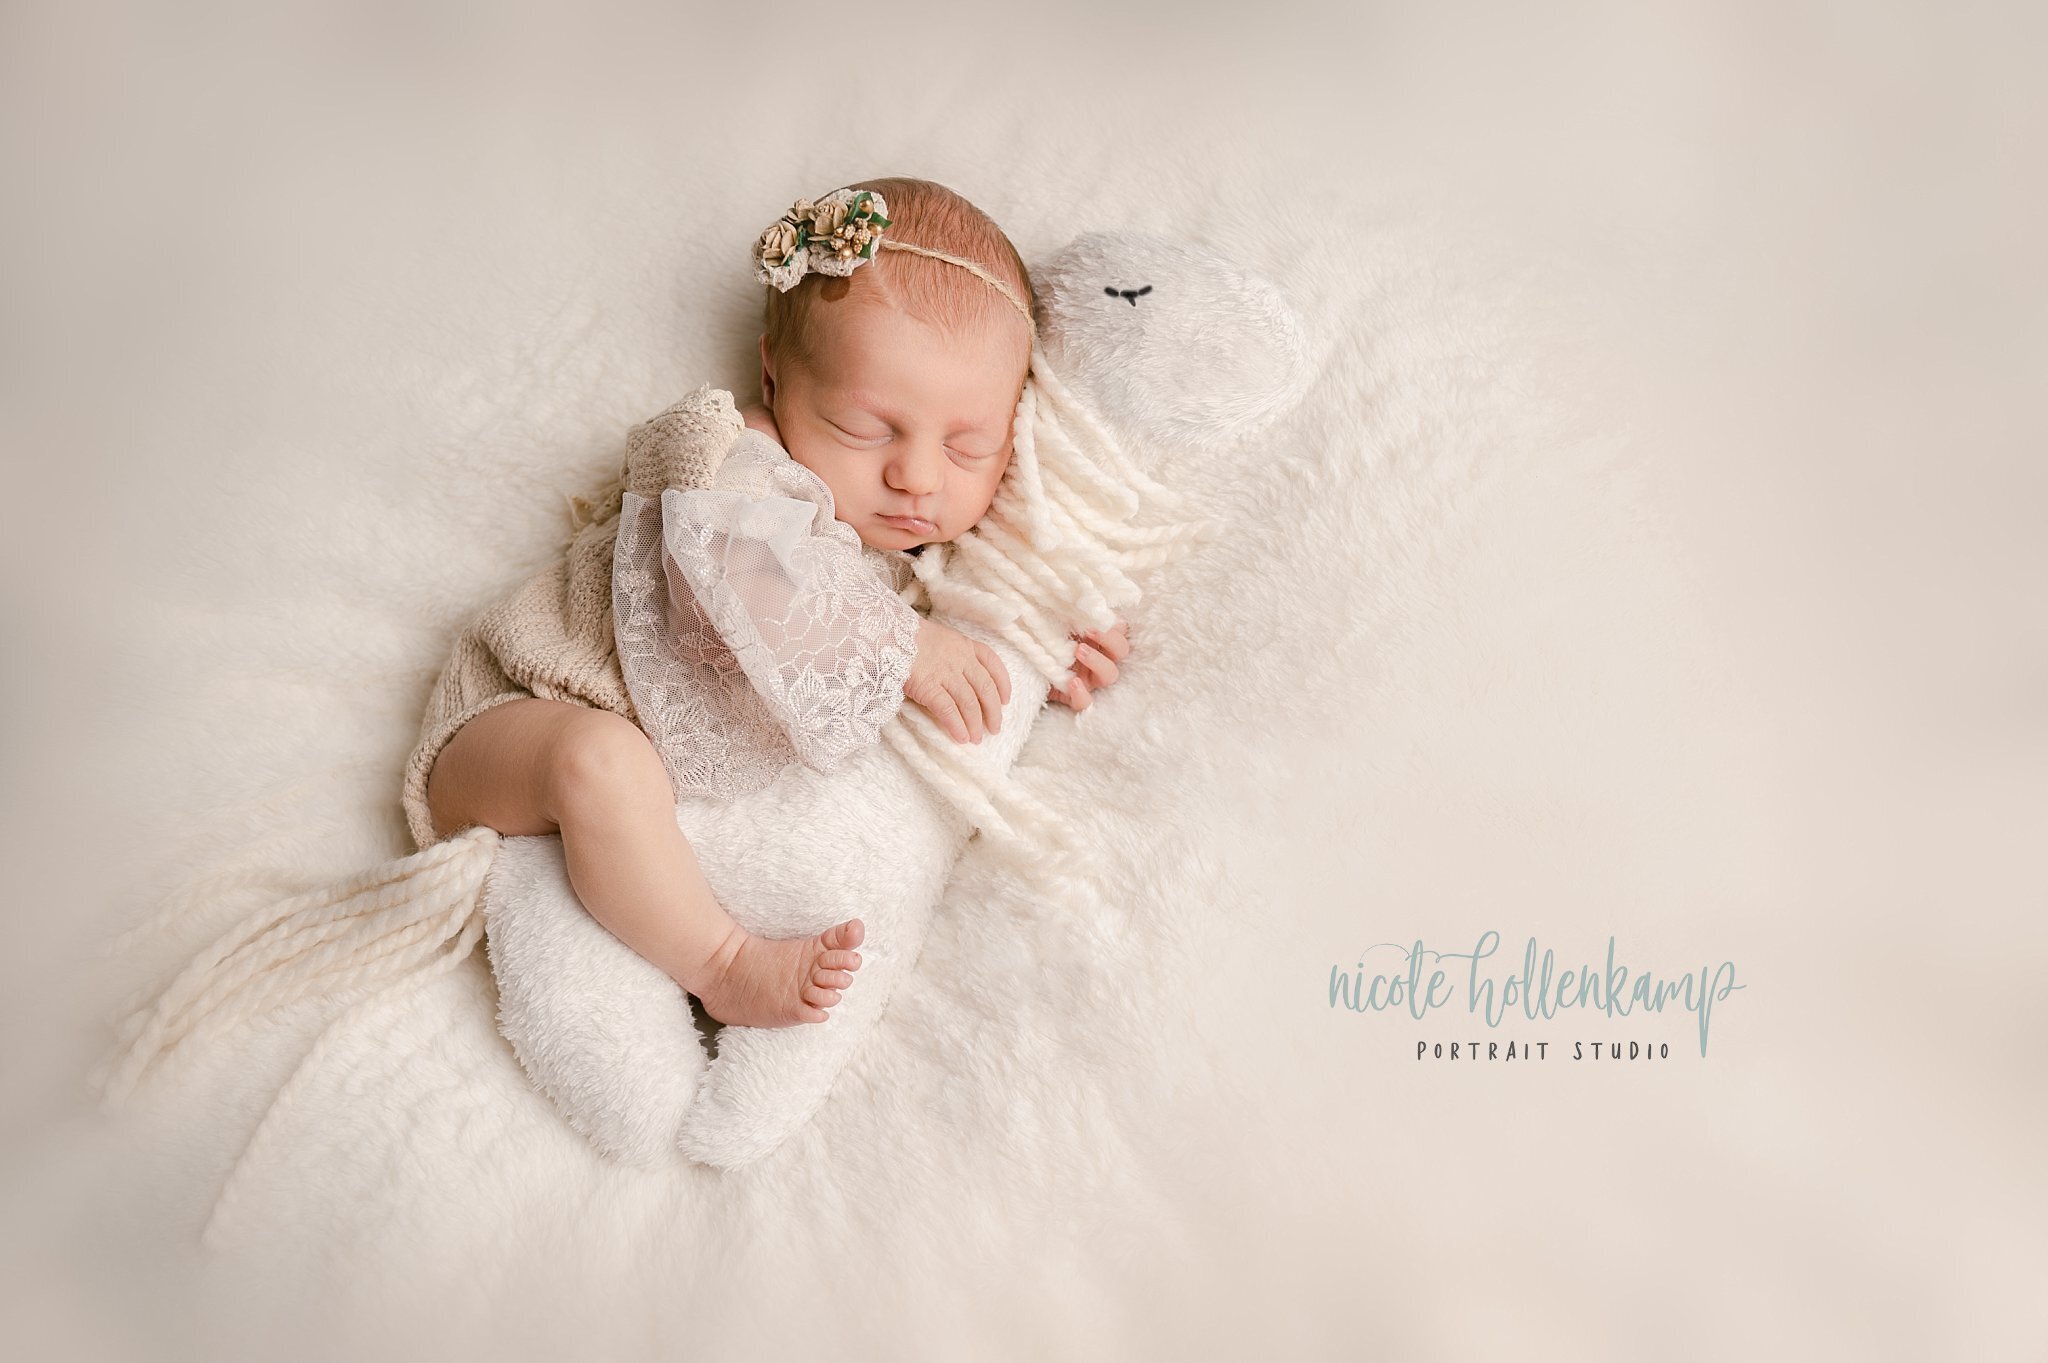 Studio Newborn photography in Minnesota